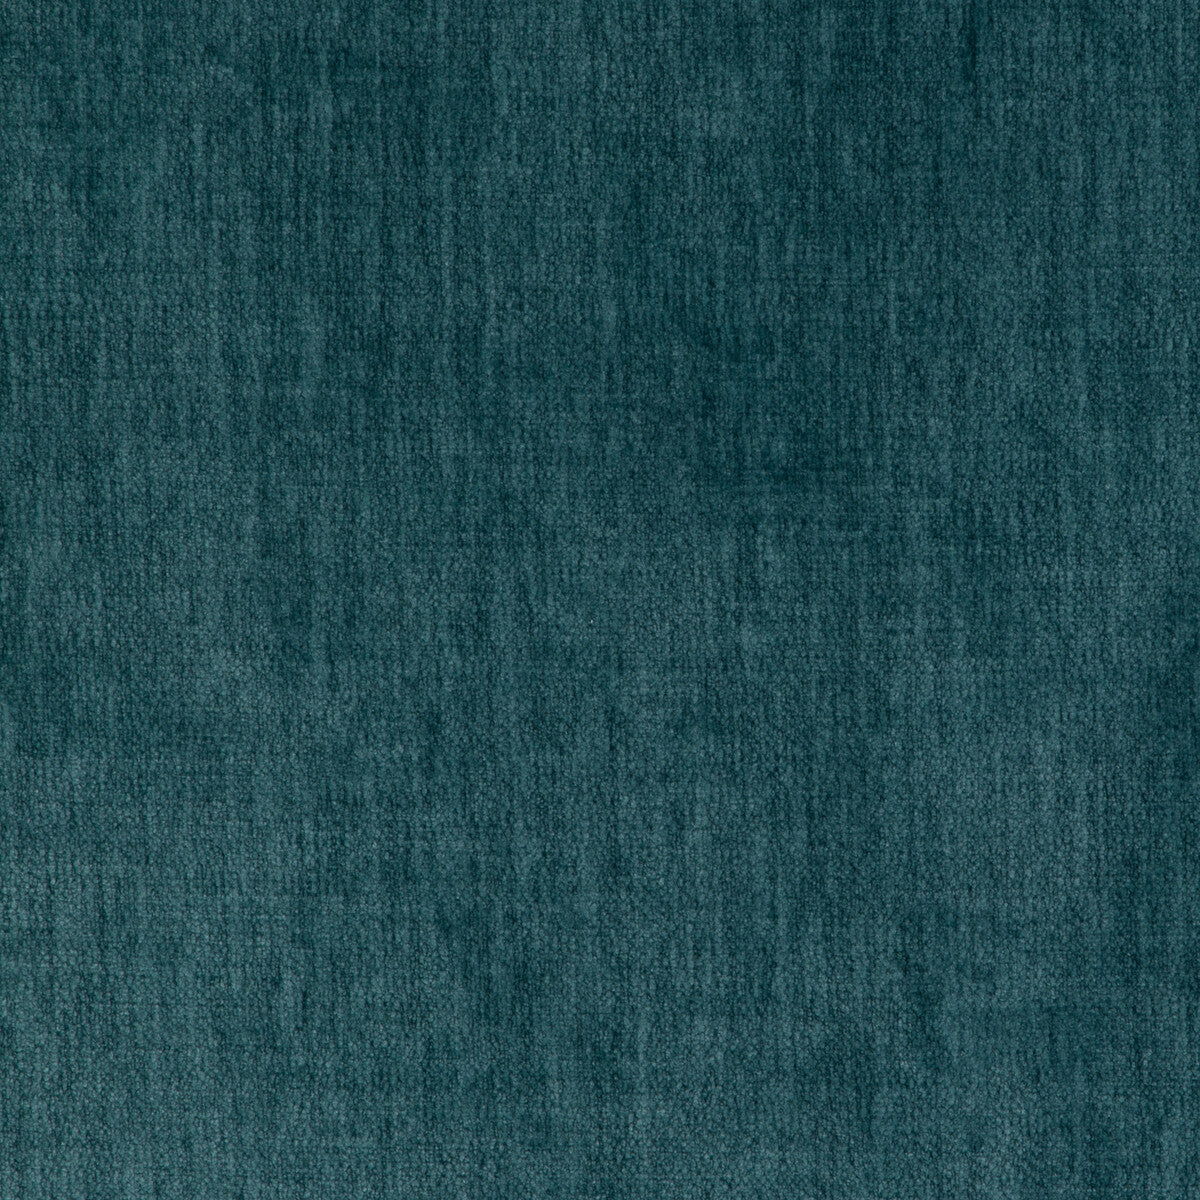 Kravet Smart fabric in 36676-313 color - pattern 36676.313.0 - by Kravet Smart in the Performance Kravetarmor collection